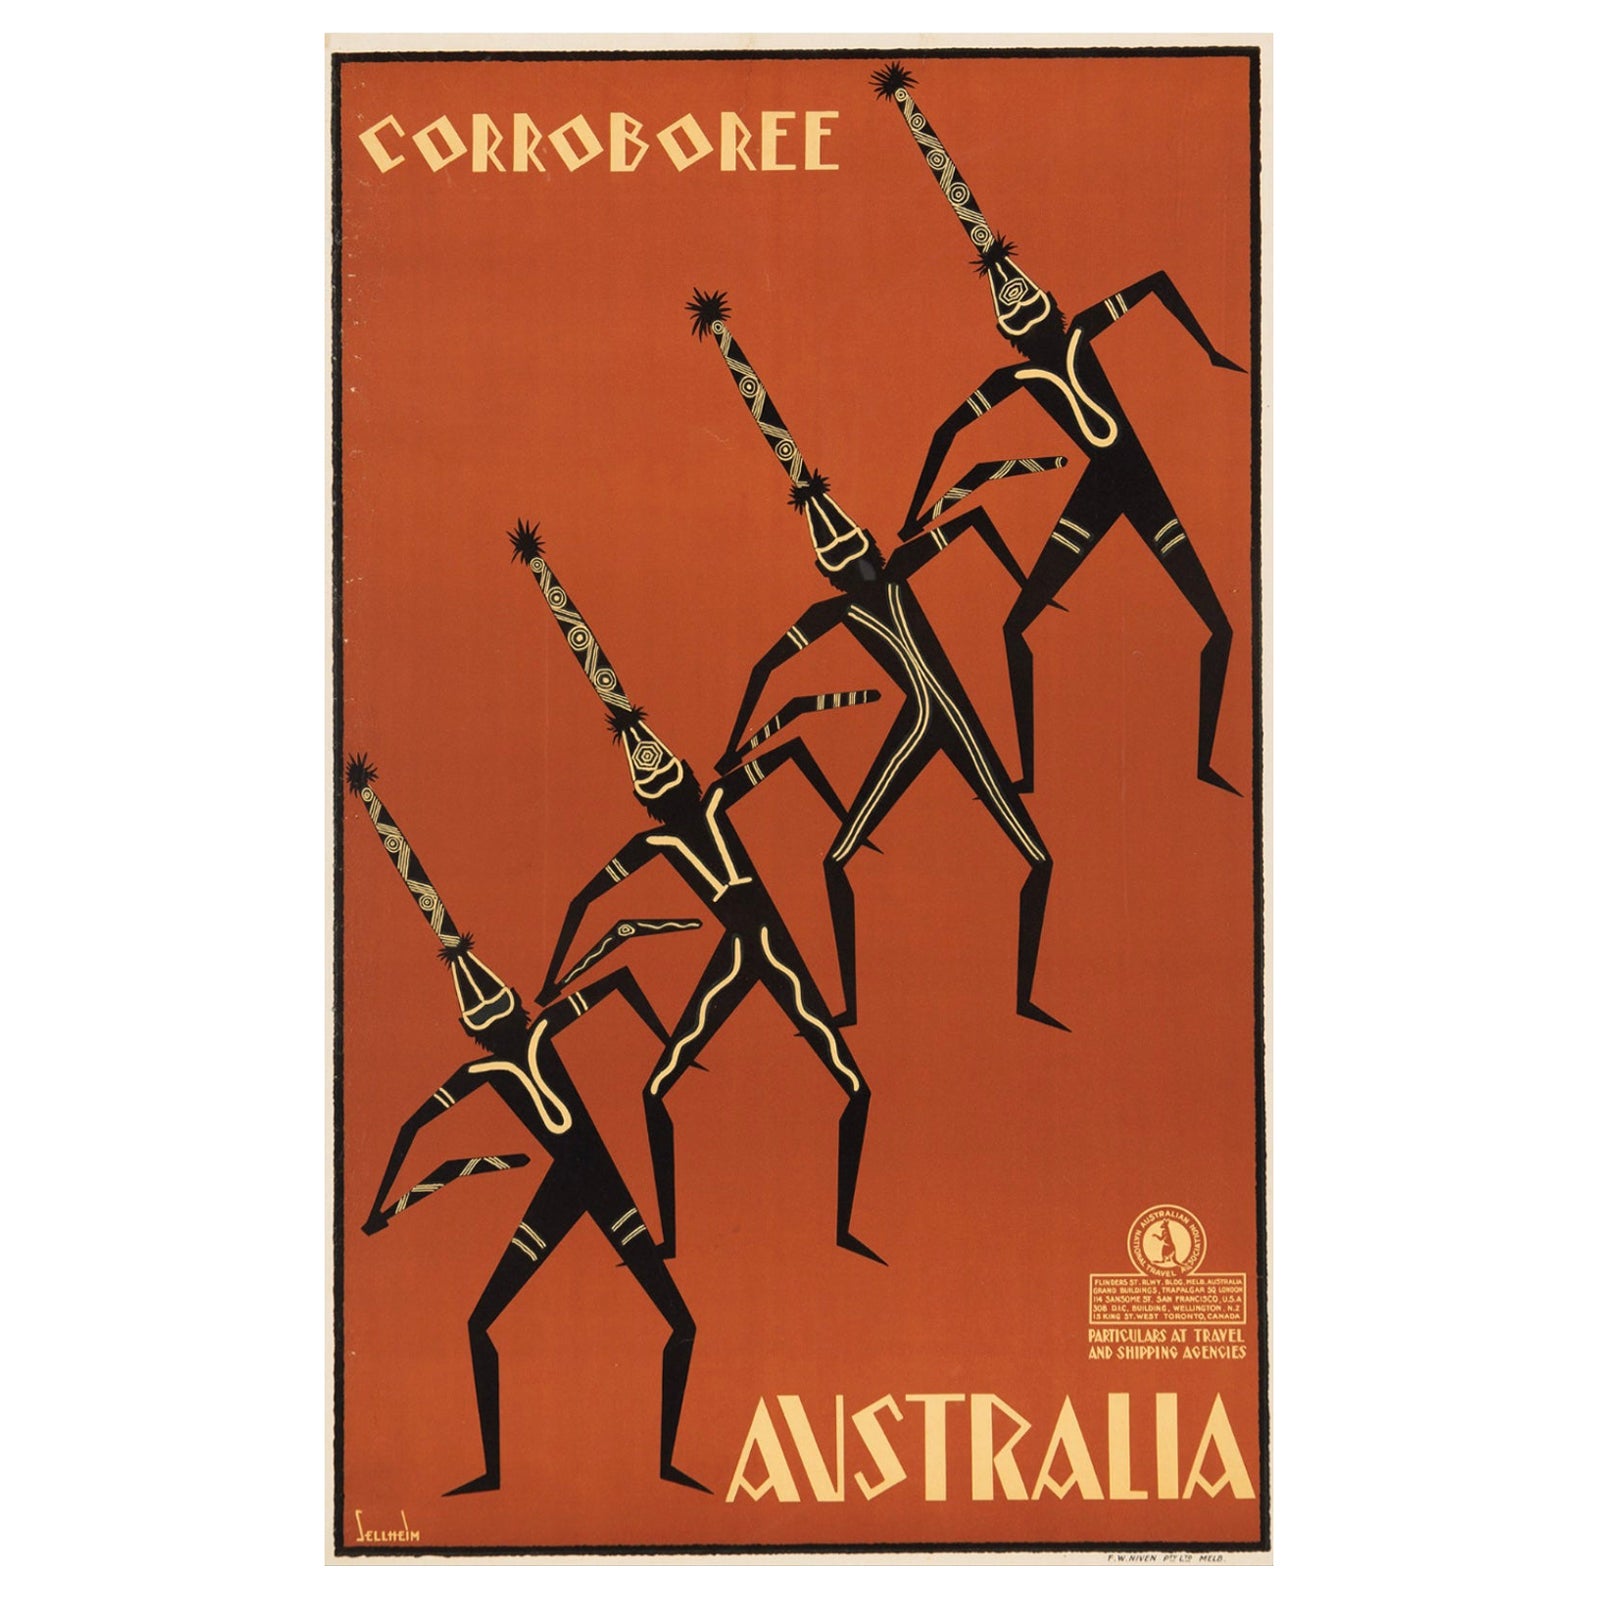 'Corroboree' Australia Original Vintage Poster by Sellheim, 1934